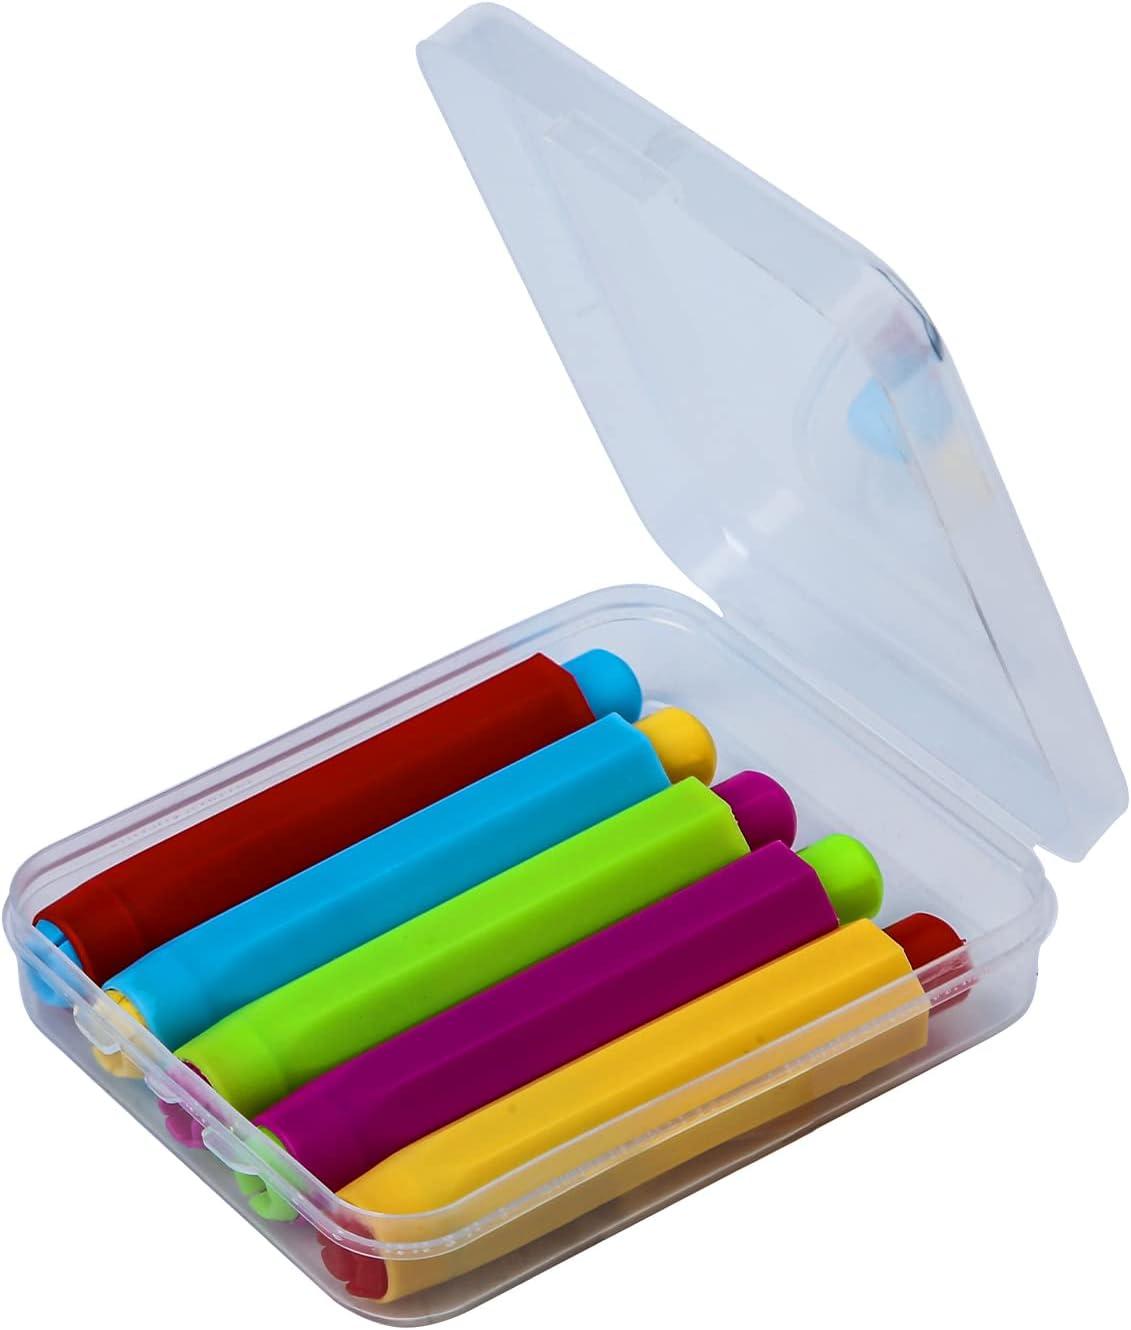 5pcs chalk holders adjustable chalk holder with storage hard case chalk holder stick in red pink blue yellow